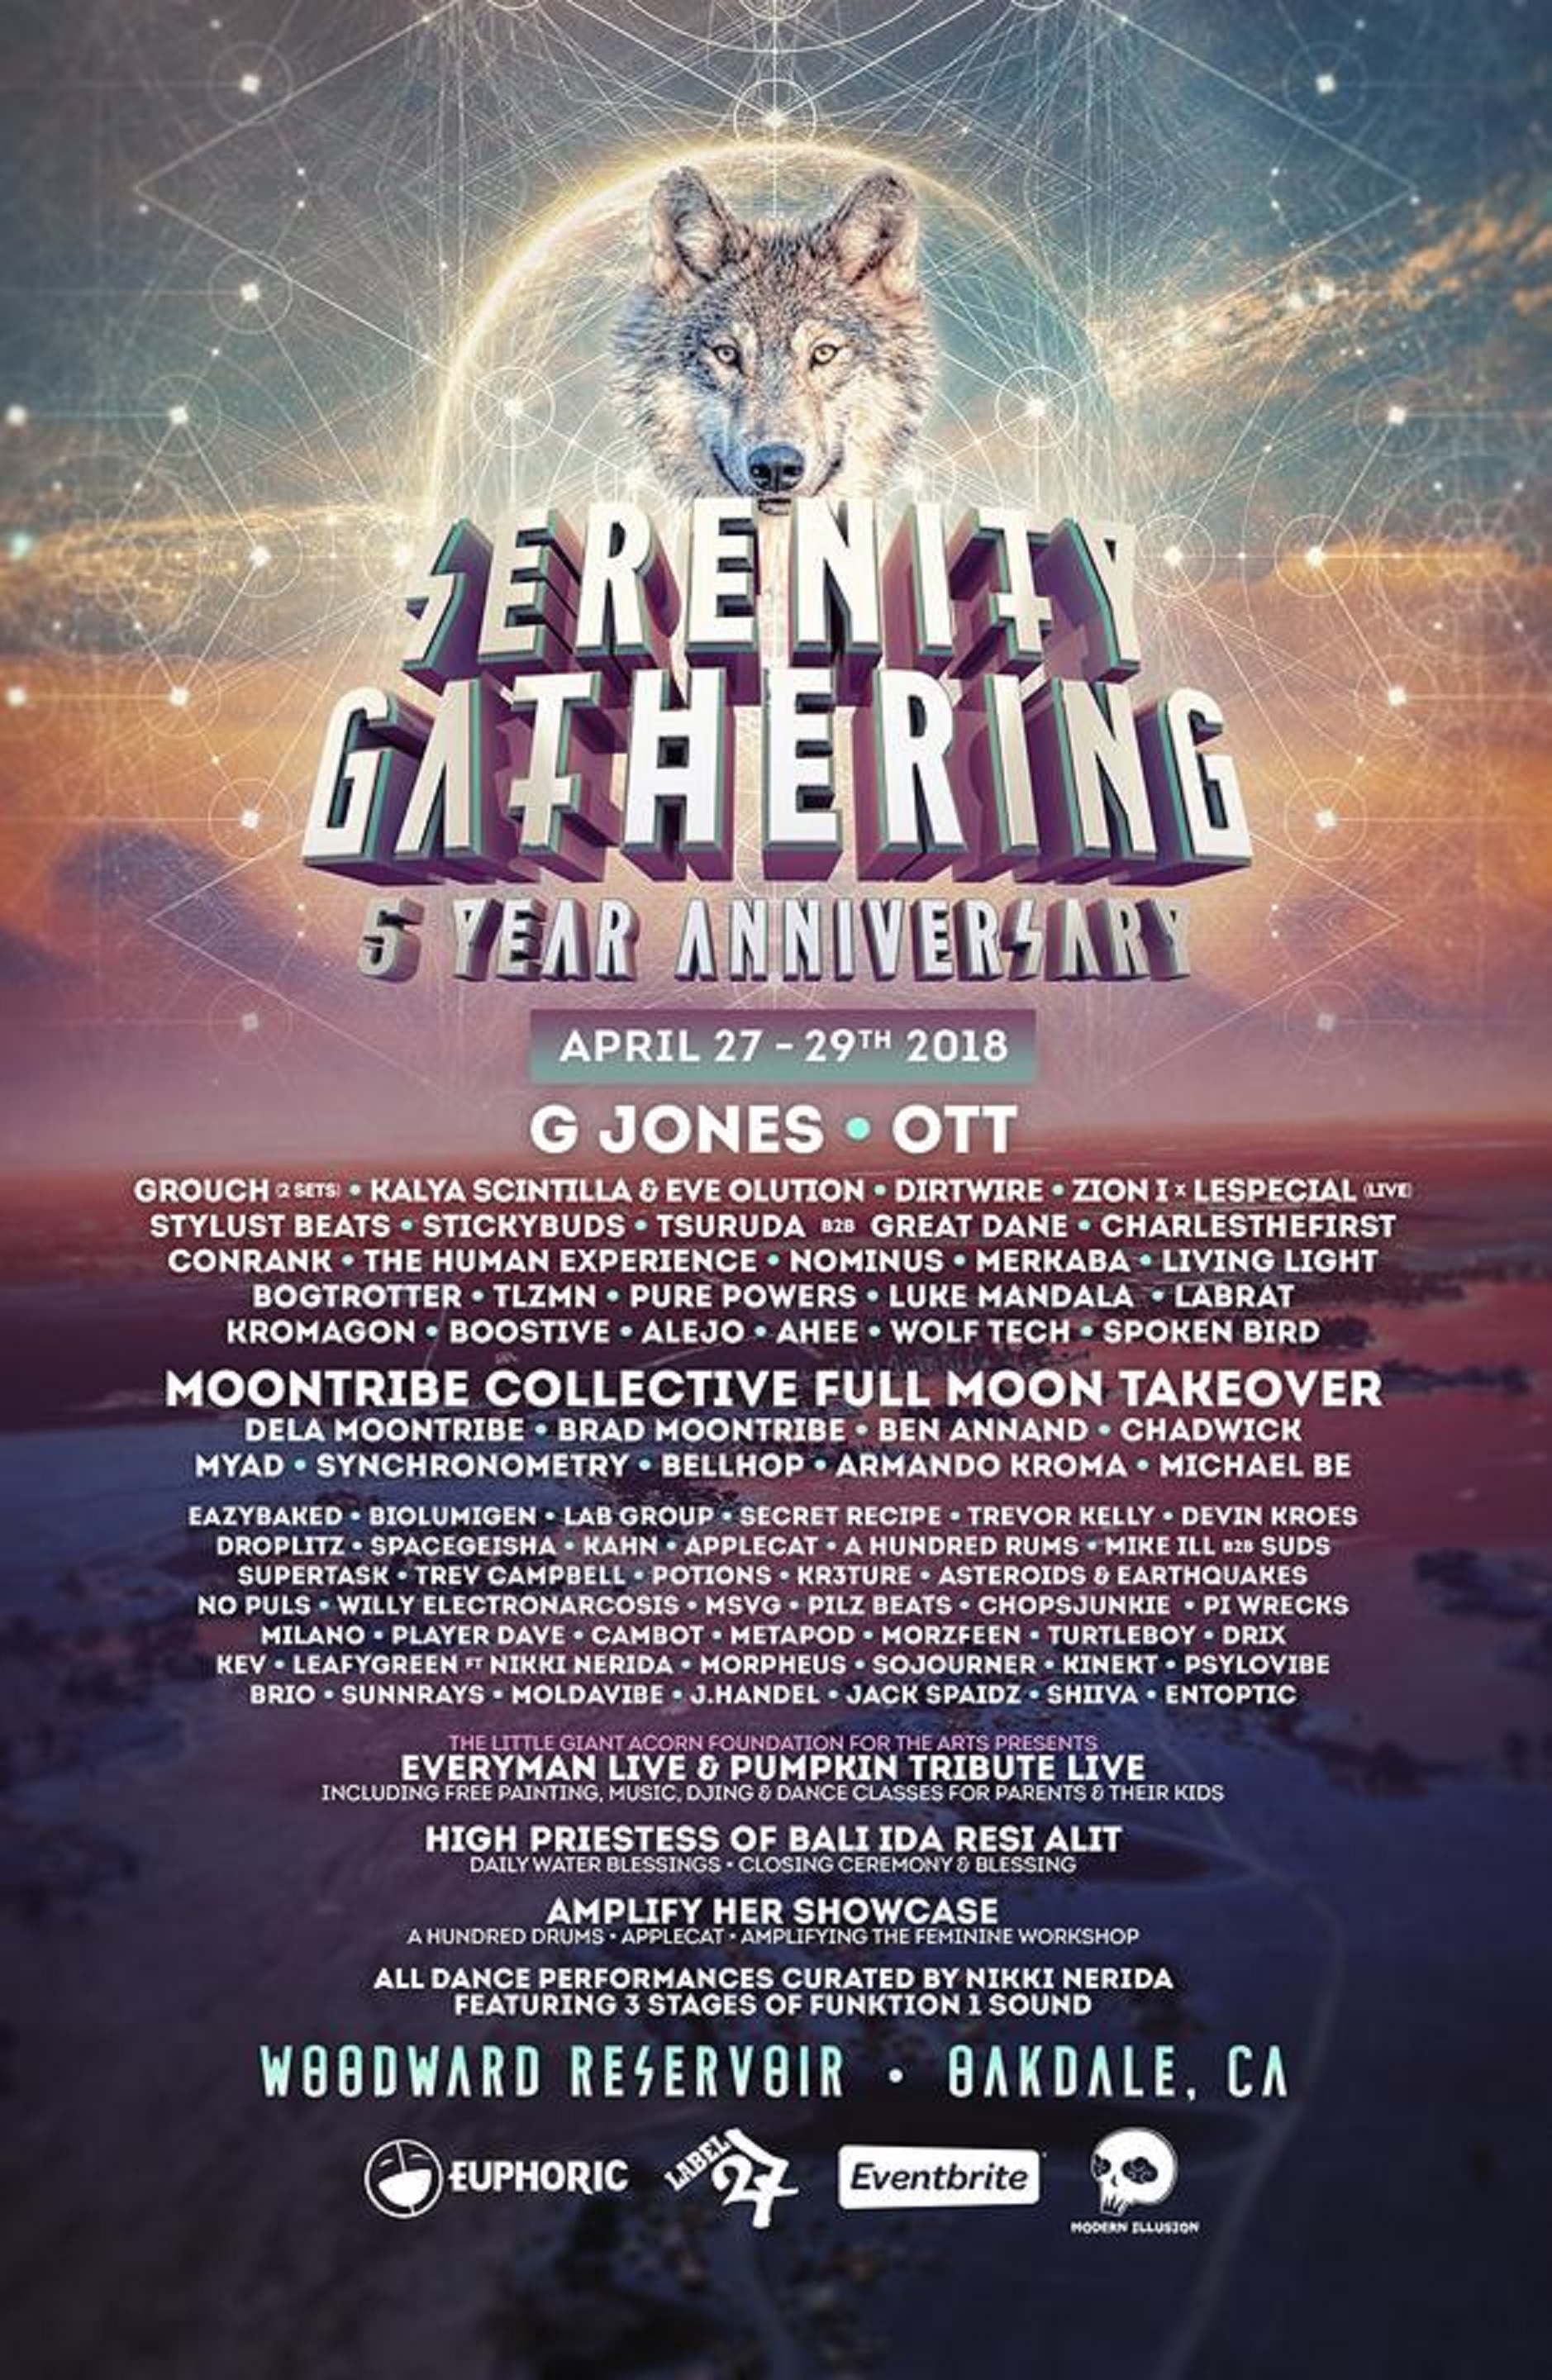 Serenity Gathering returns to Celebrate 5th Anniversary